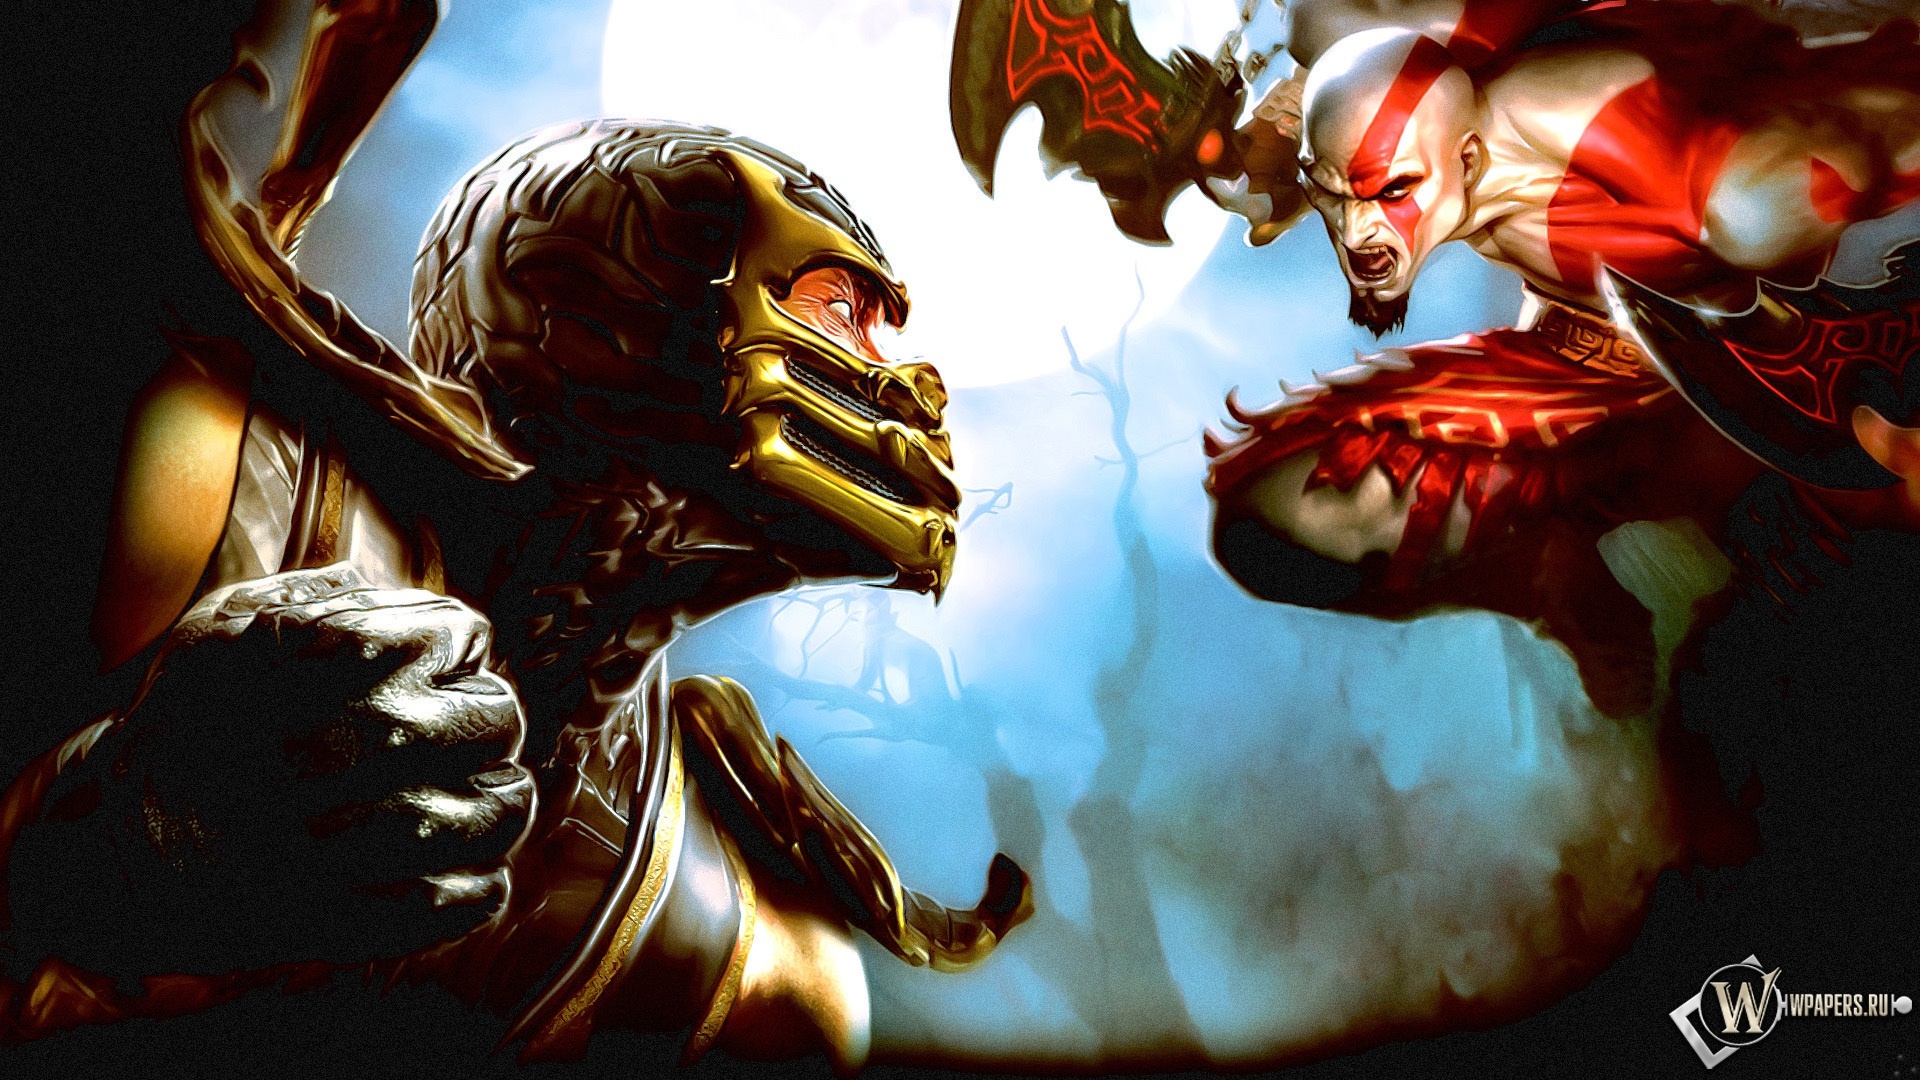 Cool Wallpapers kratos (god of war), video game, collage